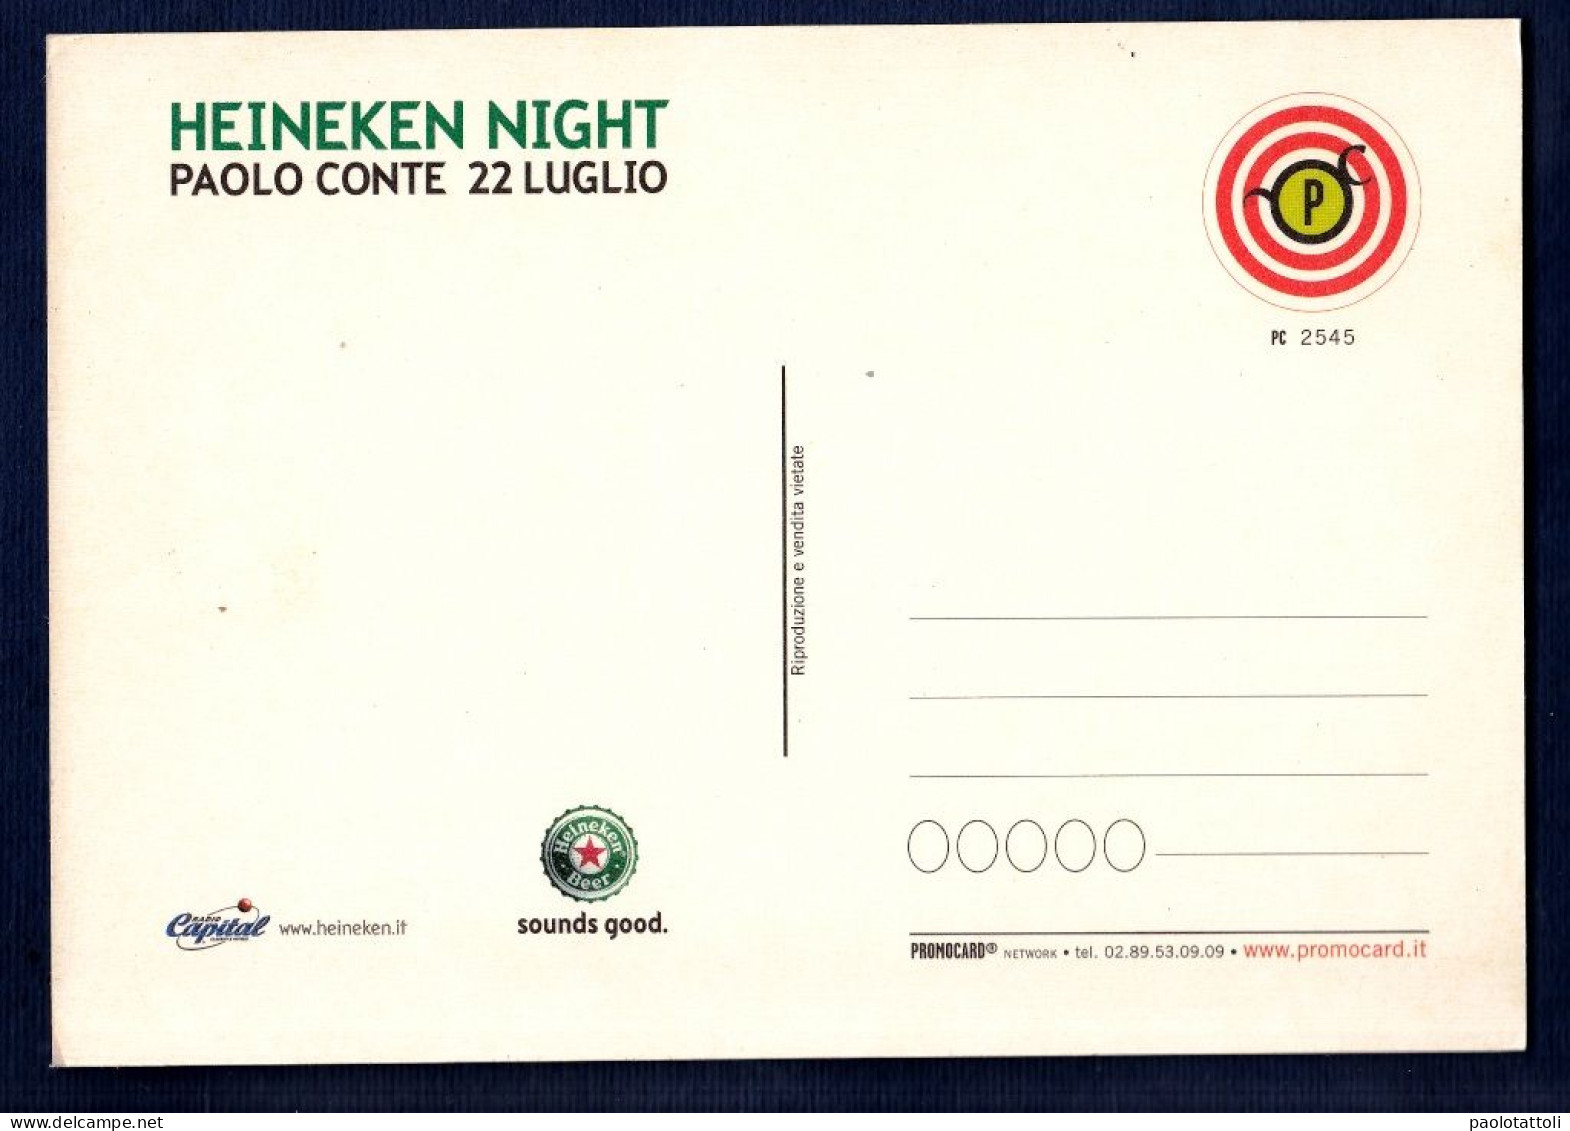 Advertising Postcard,Umbria Jazz 2001, Perugia 13-22 Luglio.HEINEKEN Night, Paolo Conte. - Musique Et Musiciens